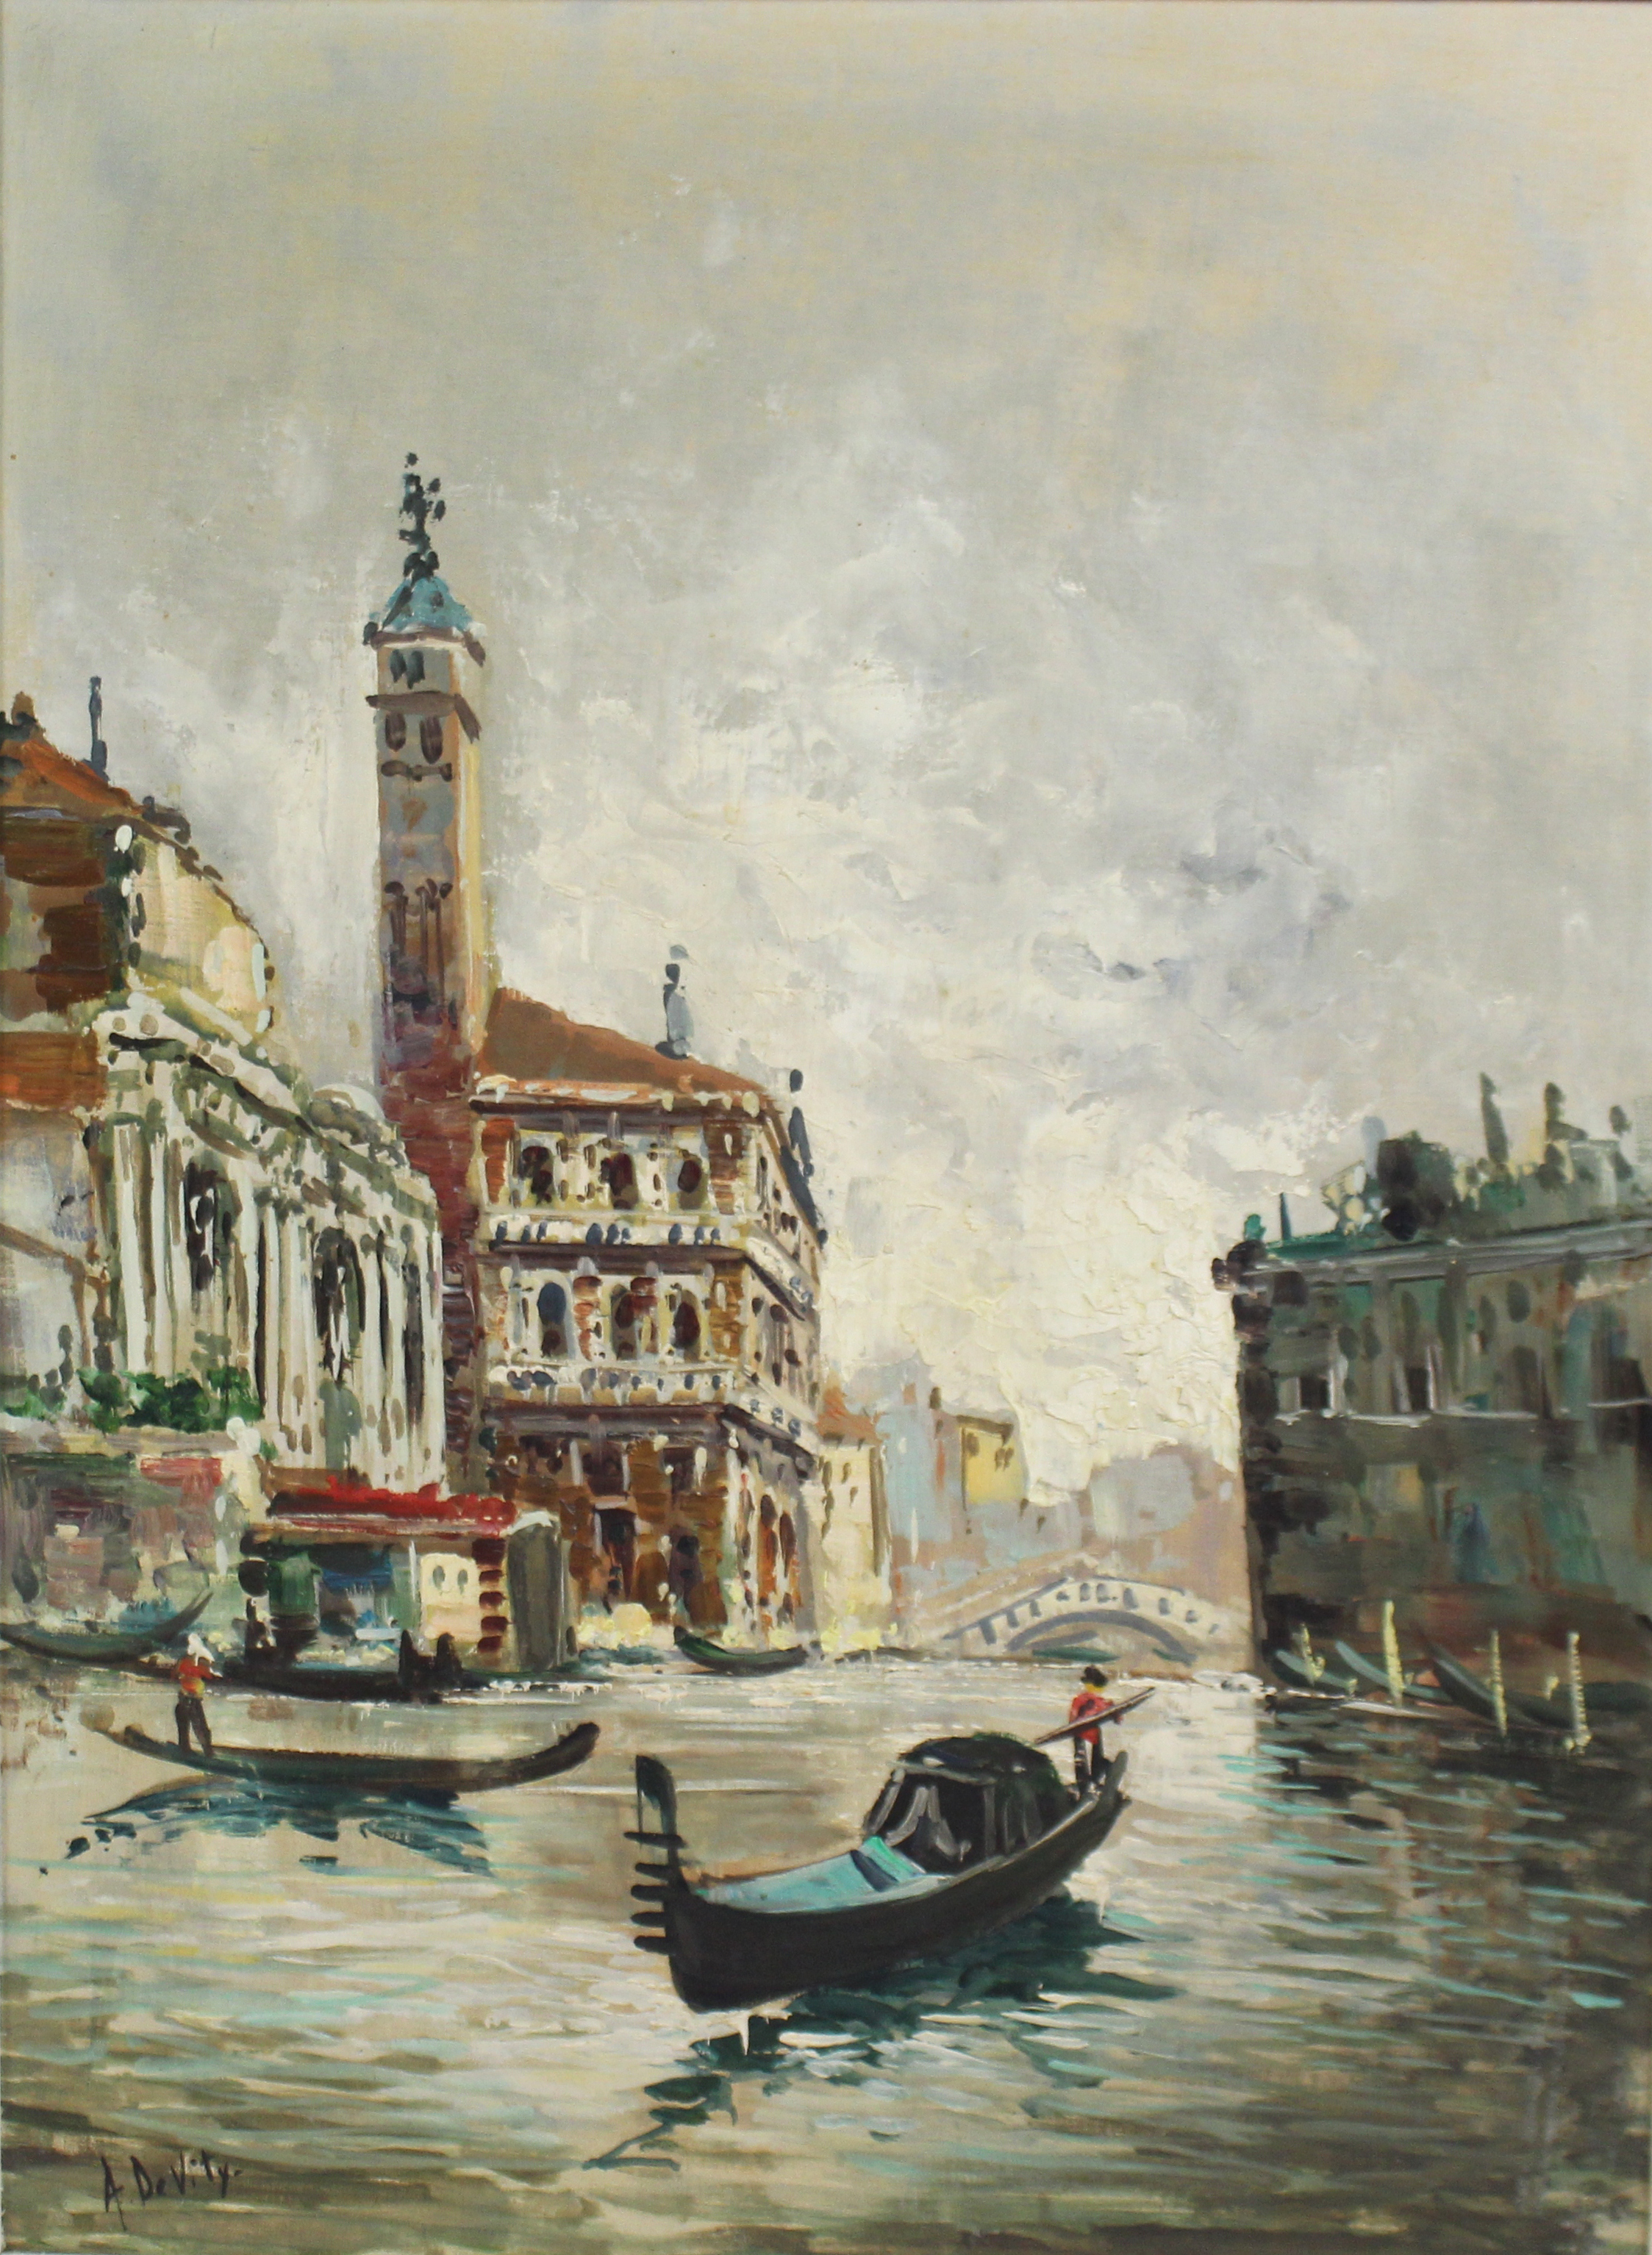 Antonio DeVity (Italian, 1901-1993) Venice Canal Oil on Canvas - Image 8 of 8